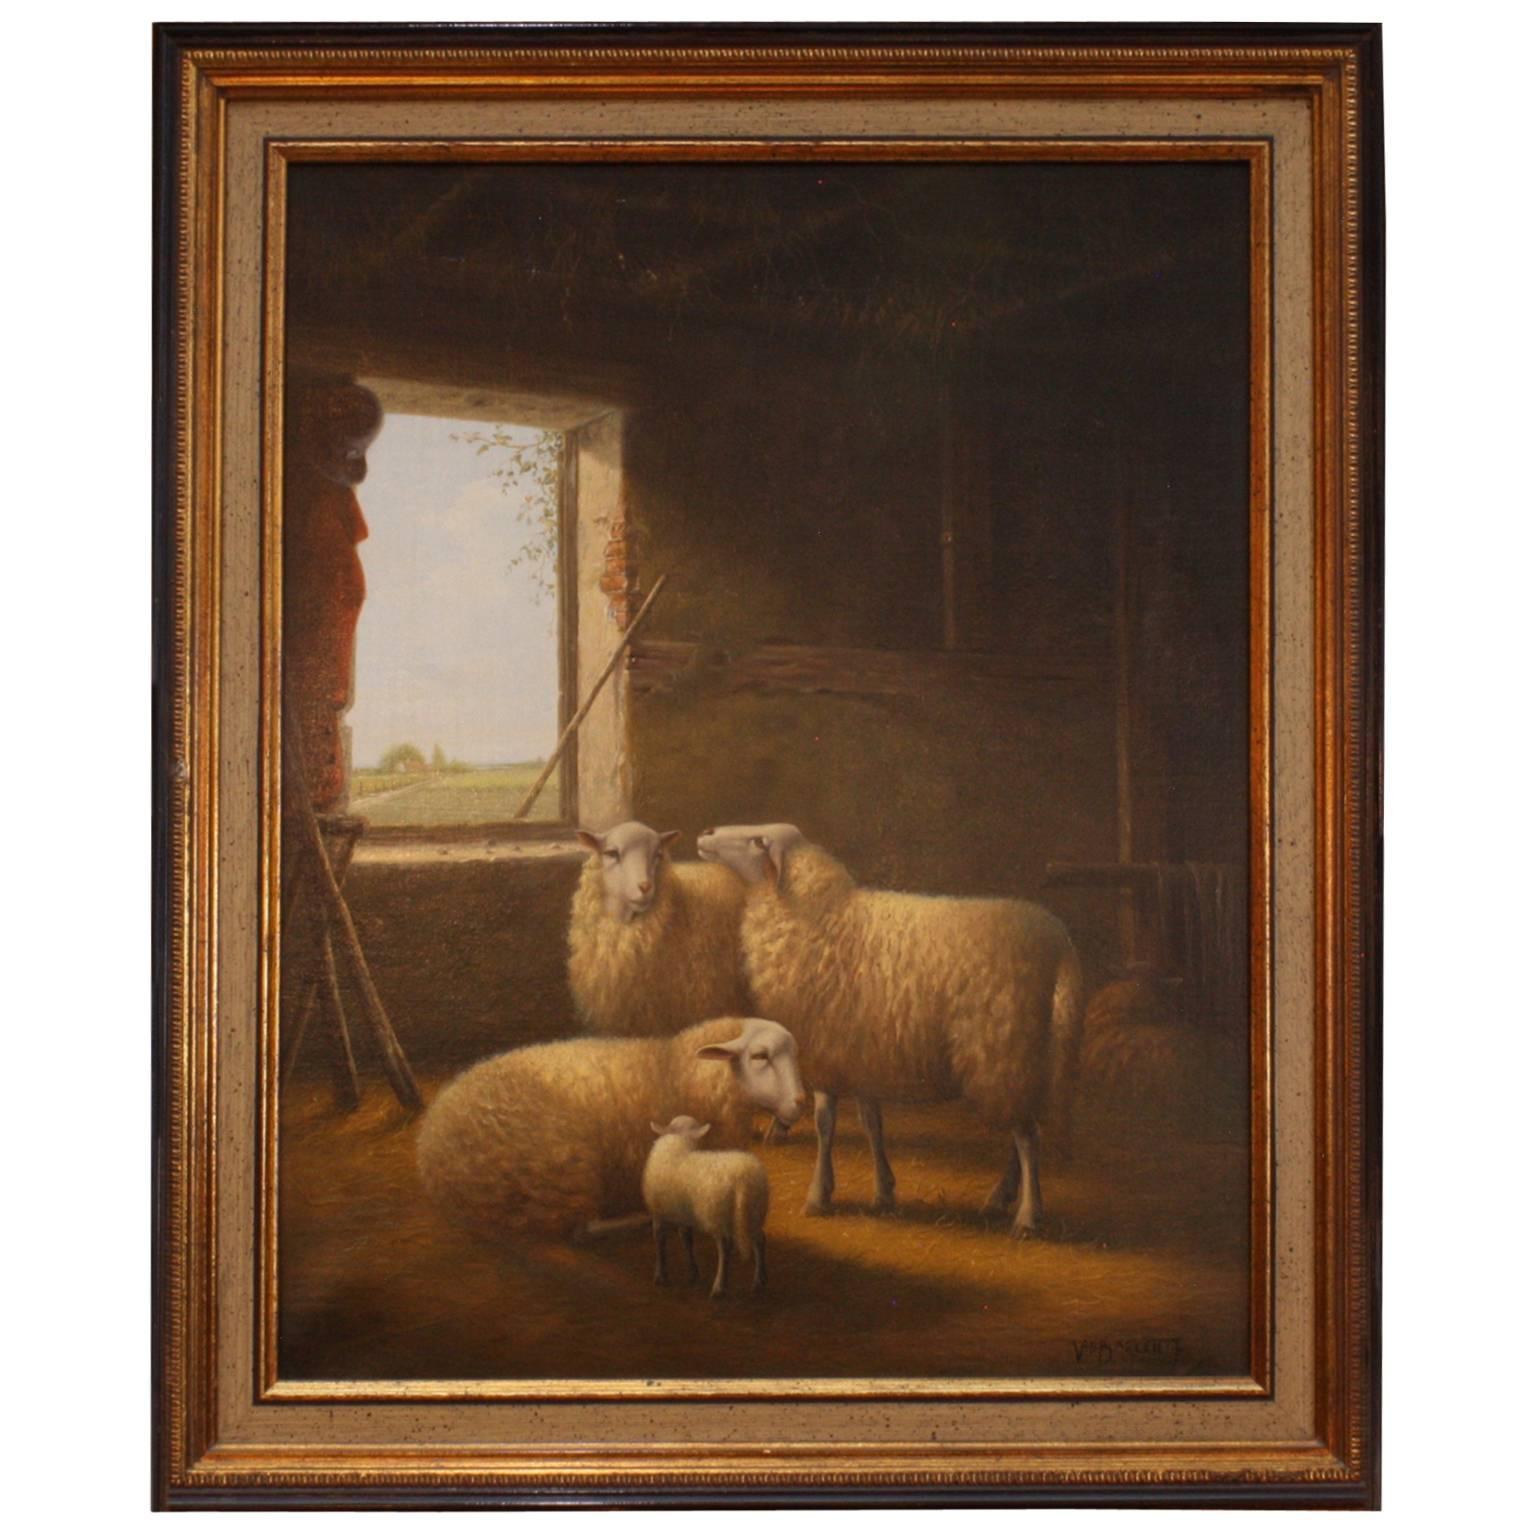 J. Van Baelen Oil on Canvas, "Sheep in a Barn" For Sale